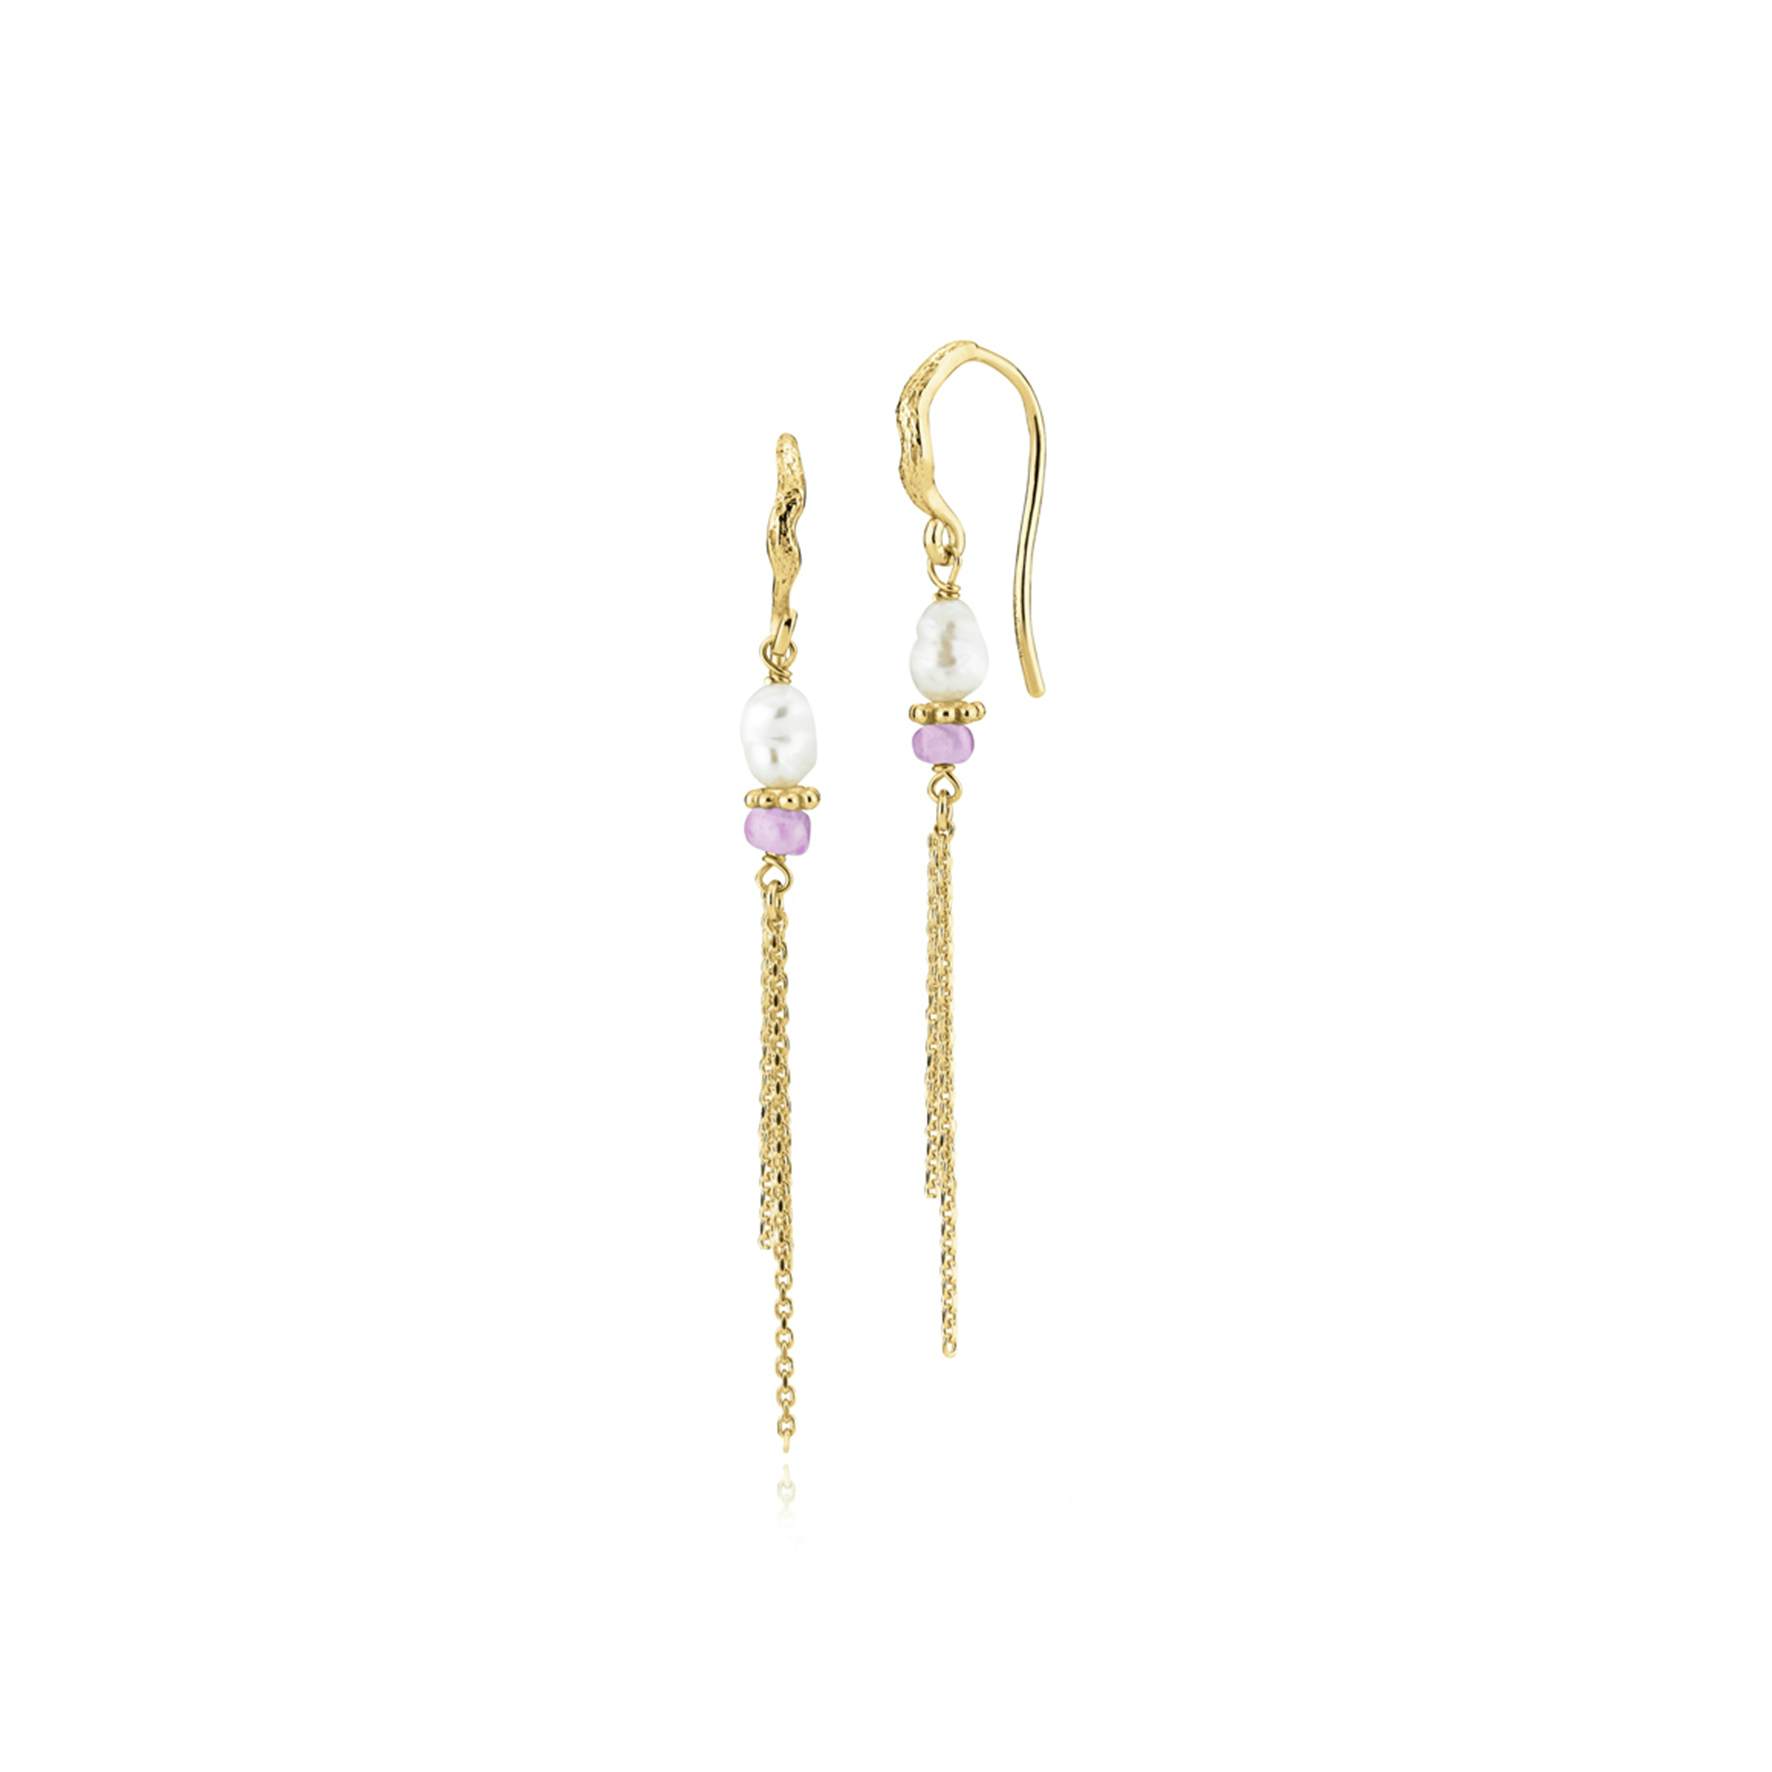 Betty Earrings Pink from Sistie in Goldplated-Silver Sterling 925